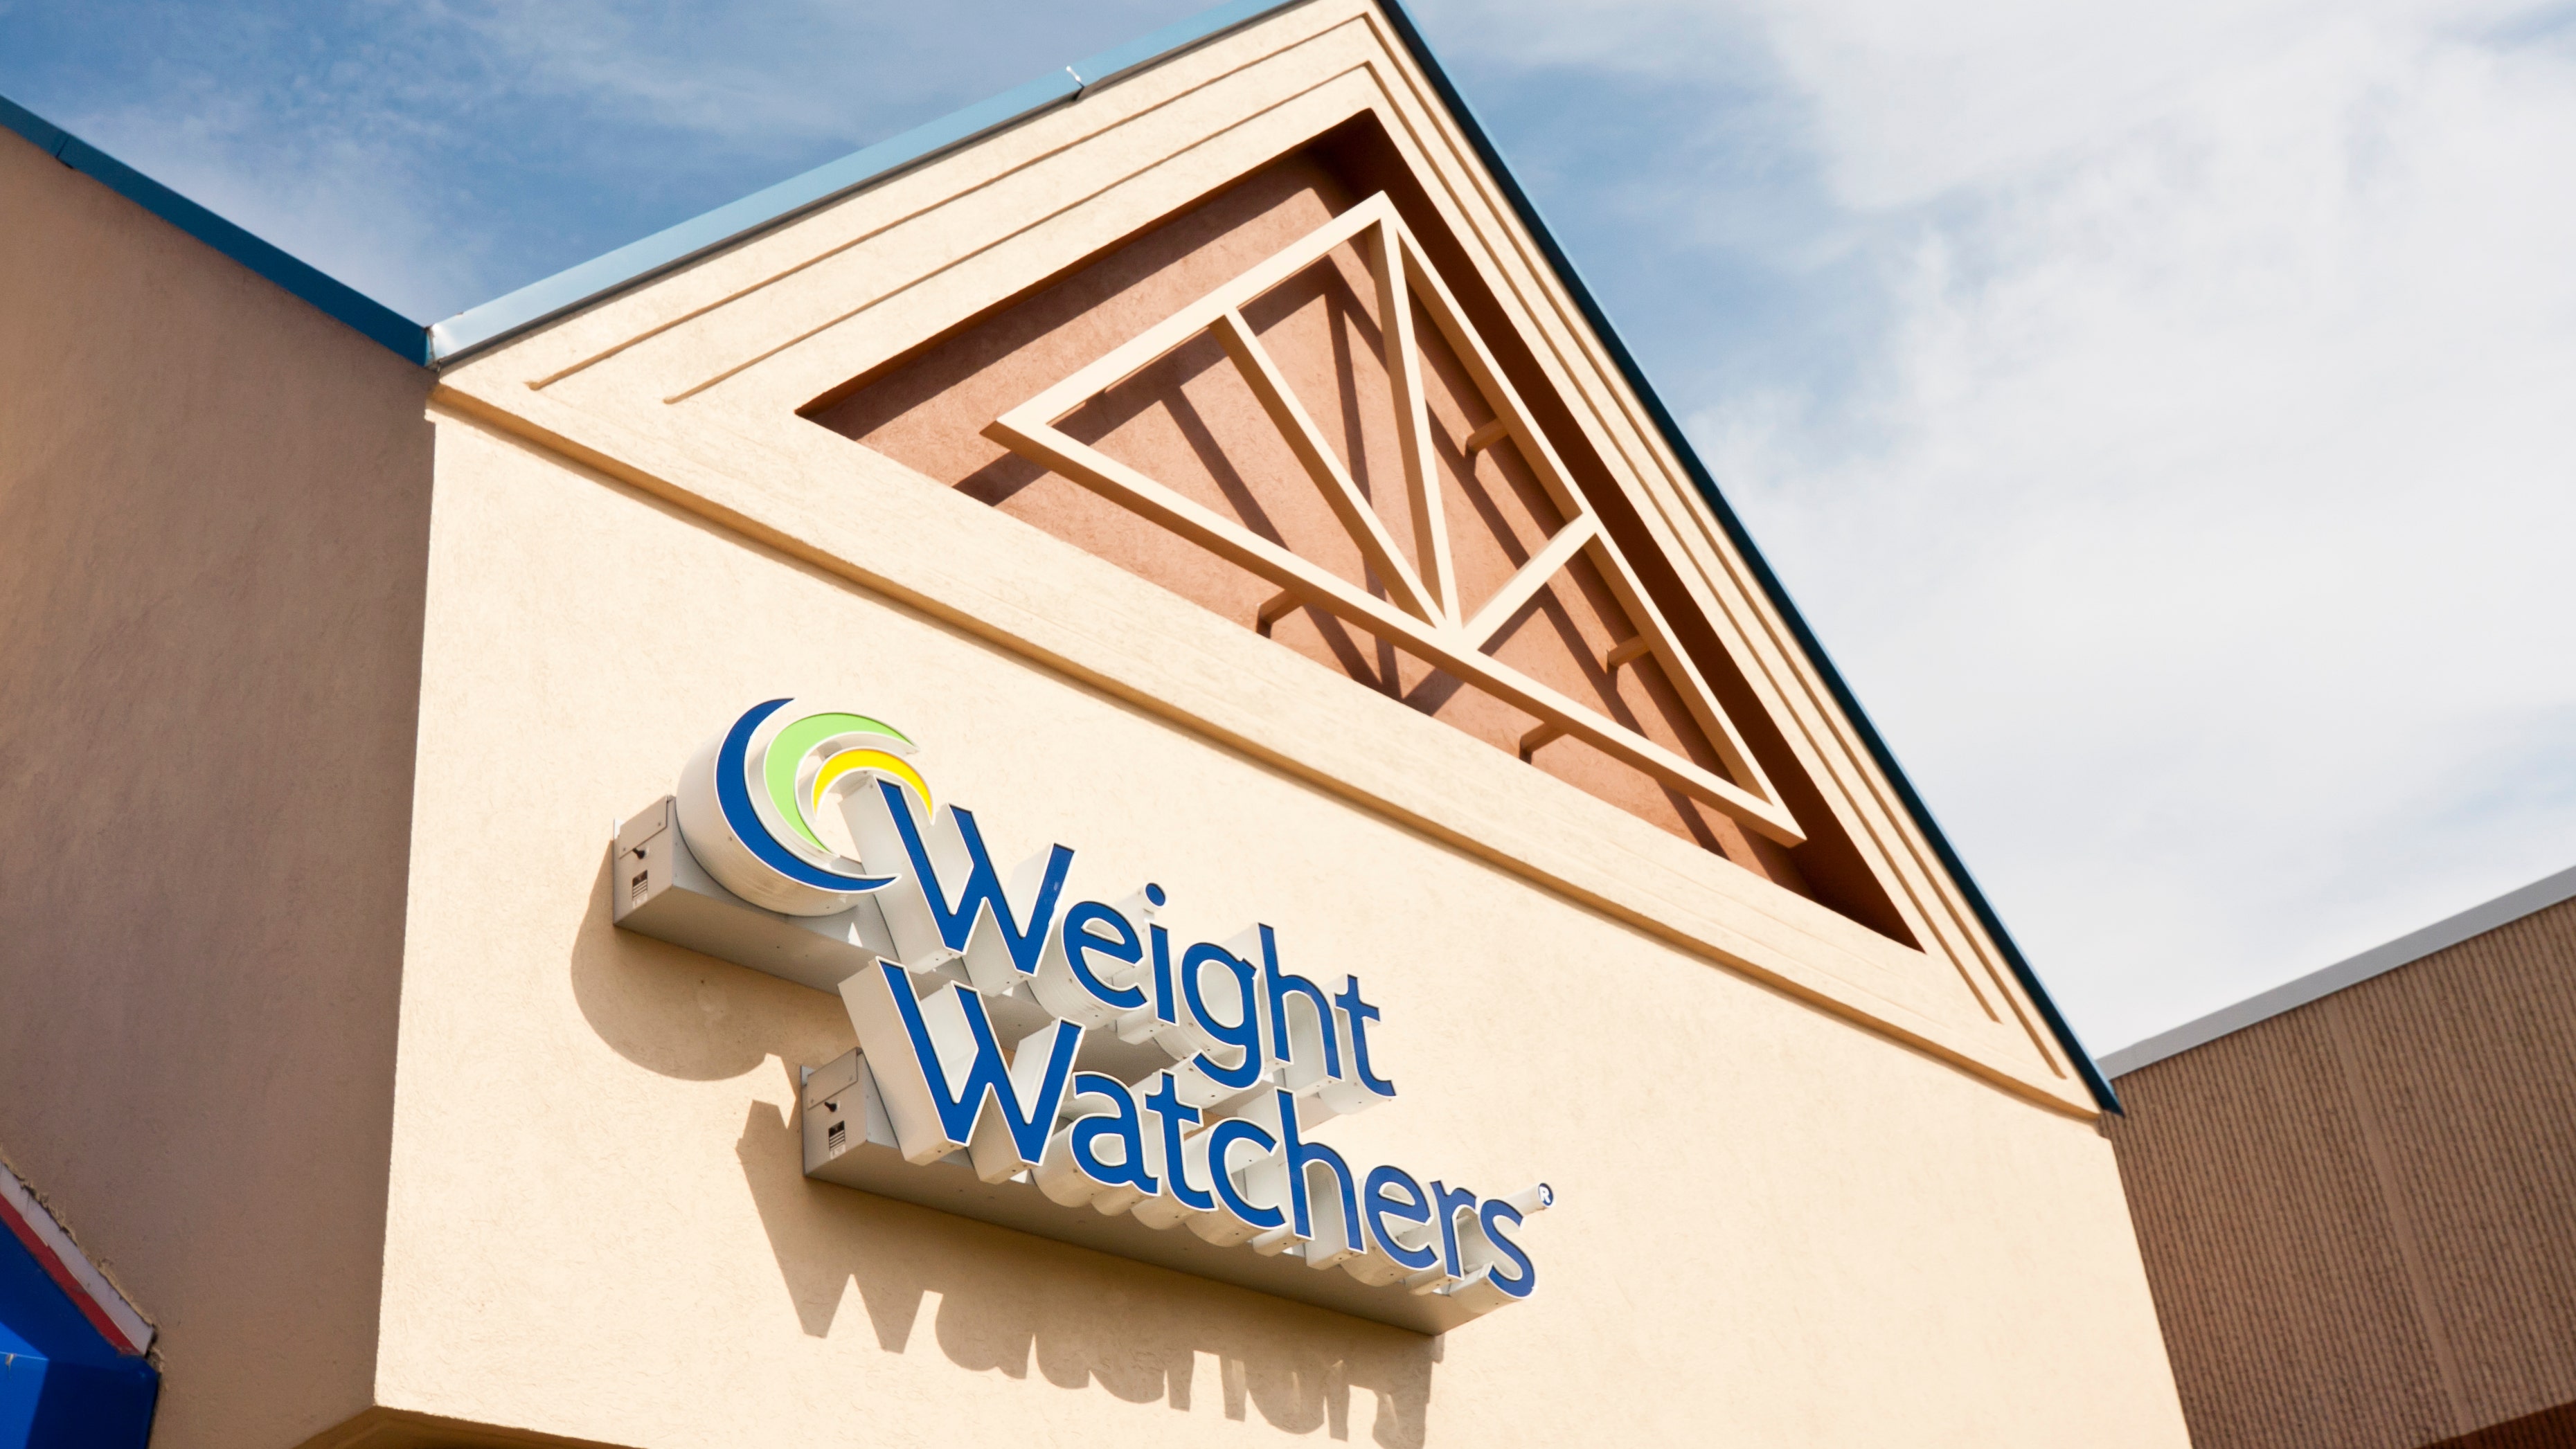 Weight Watchers releases digital weight loss subscription platform